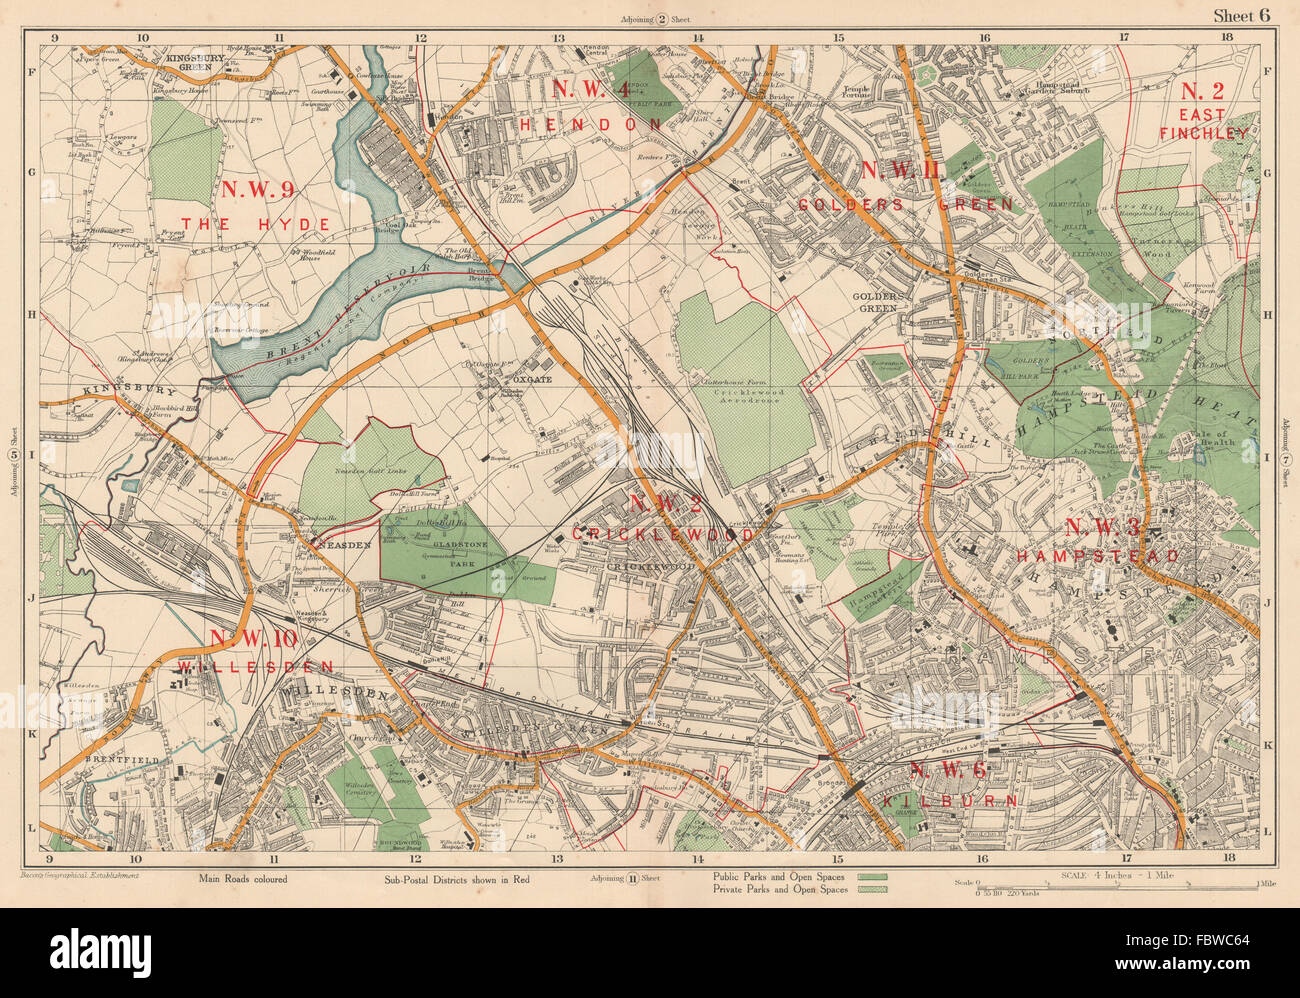 NW LONDON Cricklewood Hampstead Hendon Willesden Golders Green. BACON, 1927 map Stock Photo